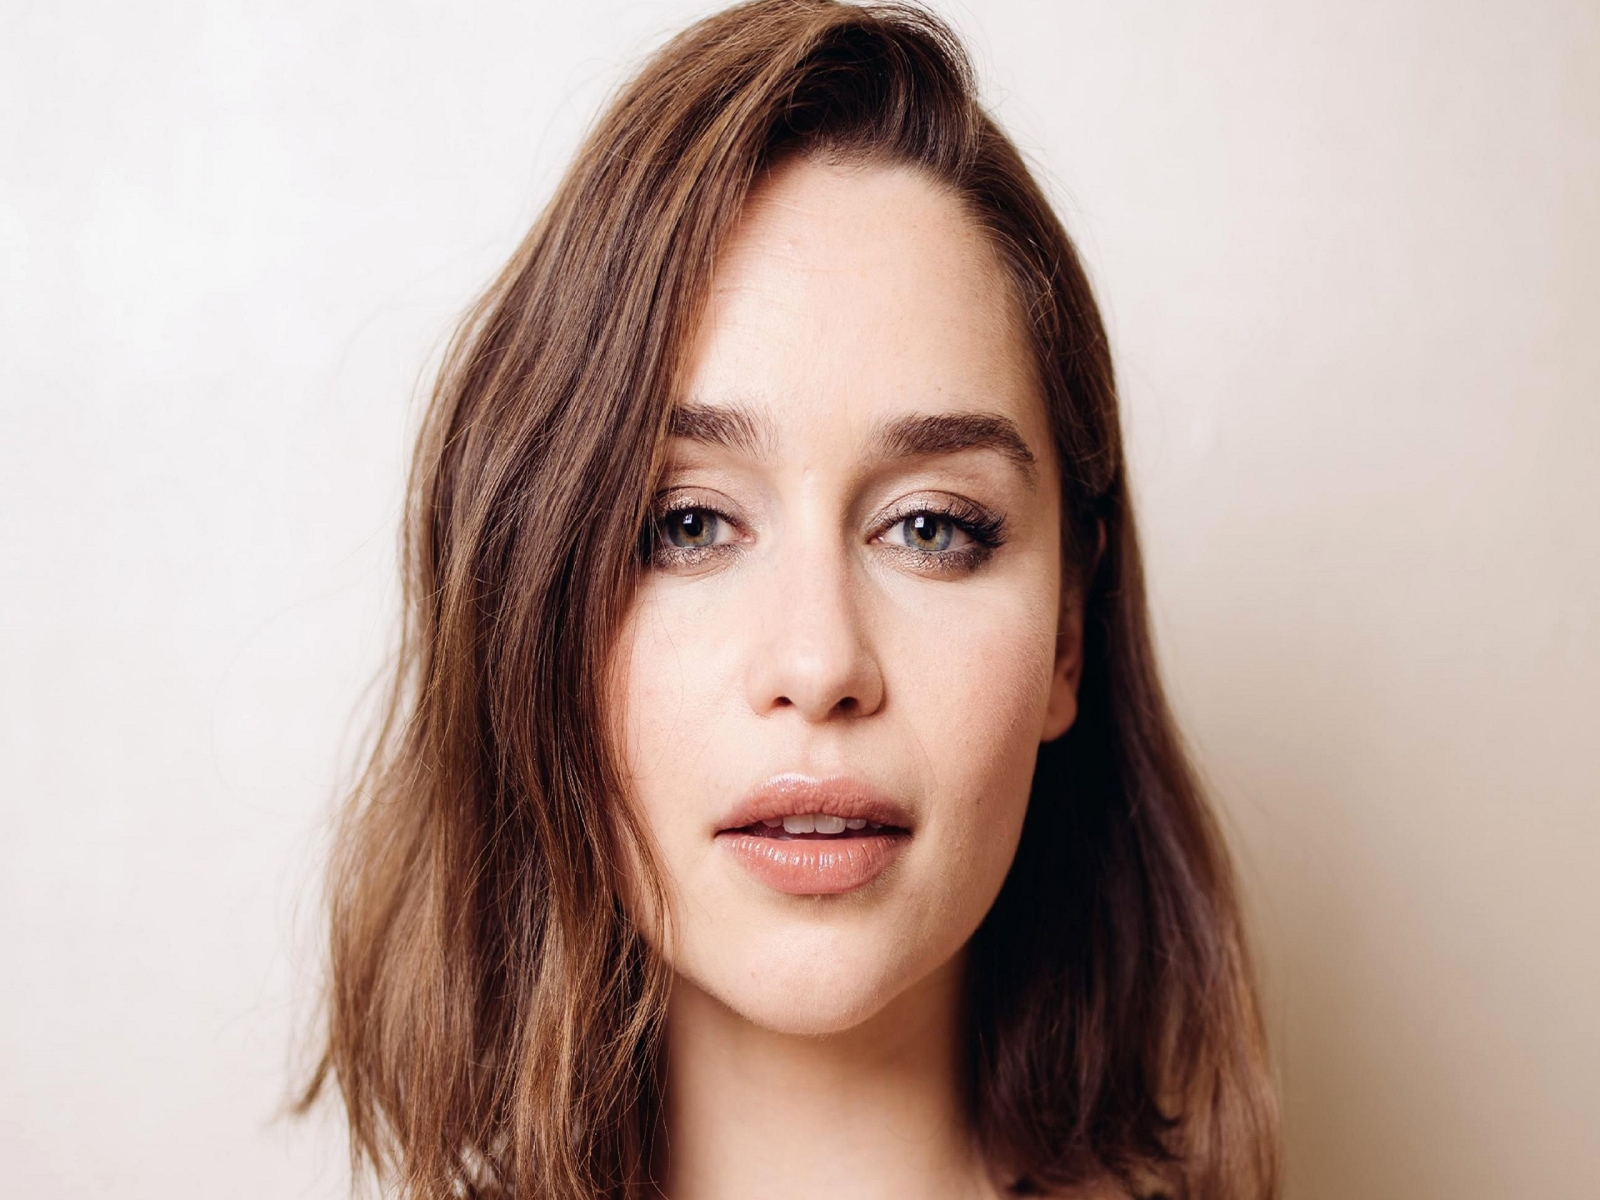 Emilia Clarke Cute Face for 1600 x 1200 resolution